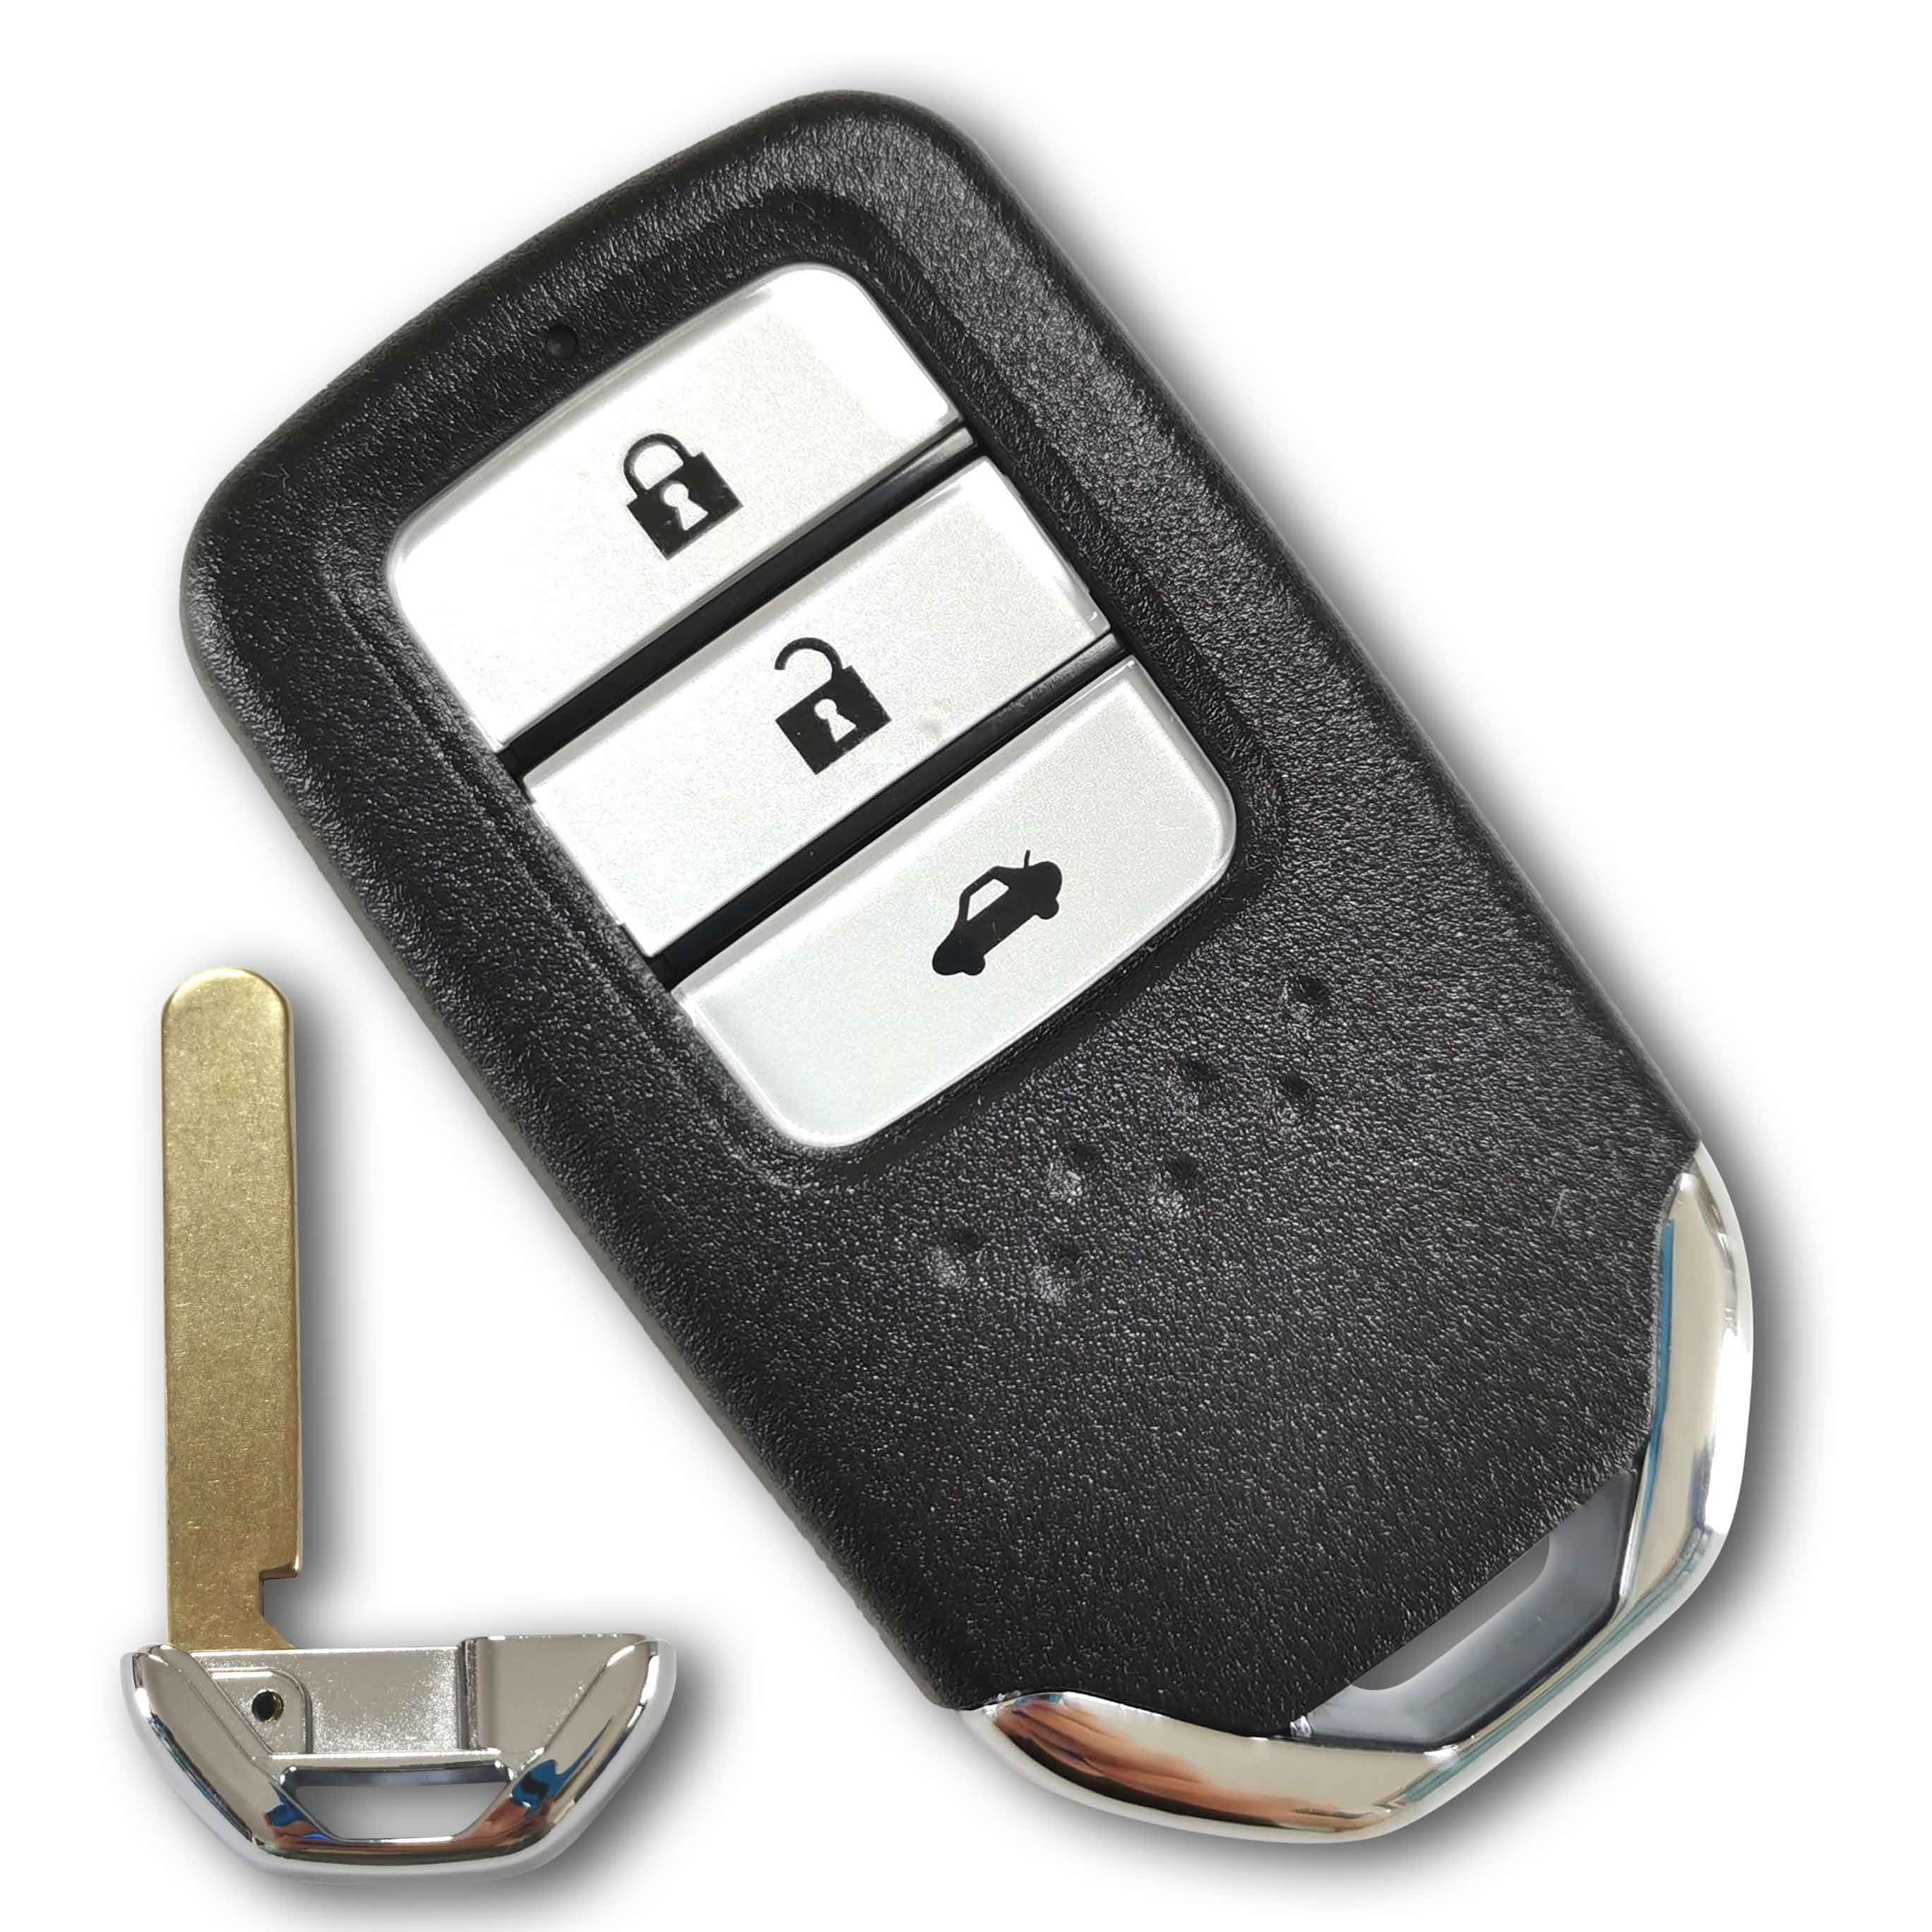 434 MHz Smart Key for 2015+ Honda Civic Jazz City Grace / KR5V2X / 47 Chip